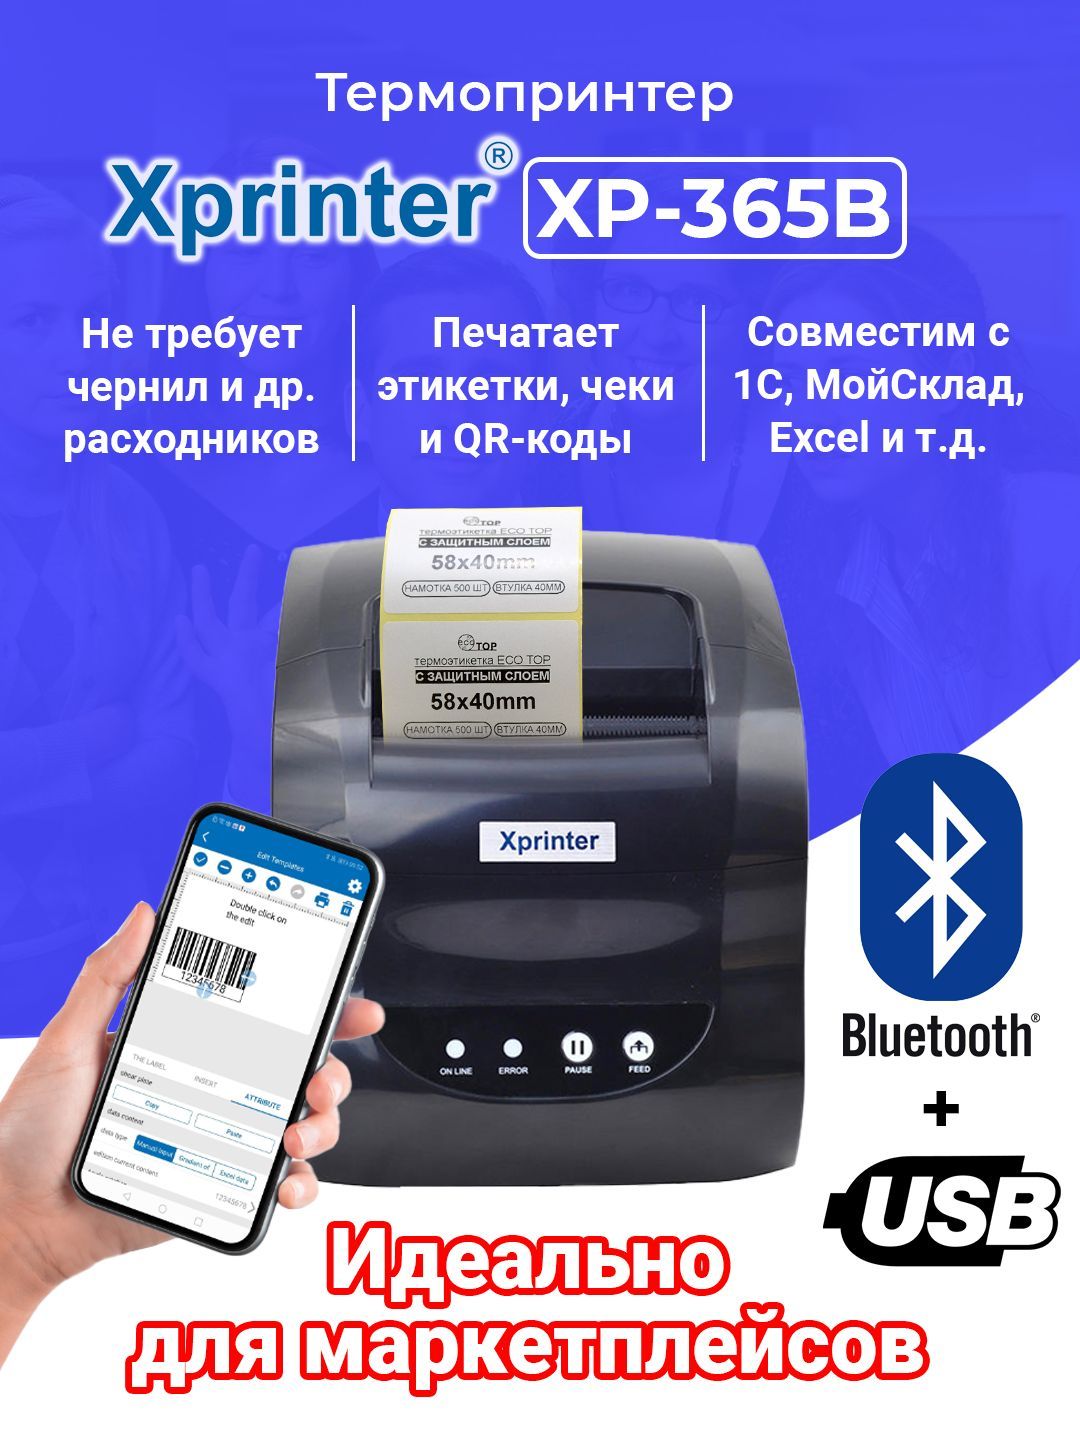 365b xprinter как печатать. Принтер этикеток Xprinter XP-365 (USB). Xprinter XP-365b скорость печати. Xprinter программа для печати этикеток. Xprinter XP-365b программа для печати этикеток.